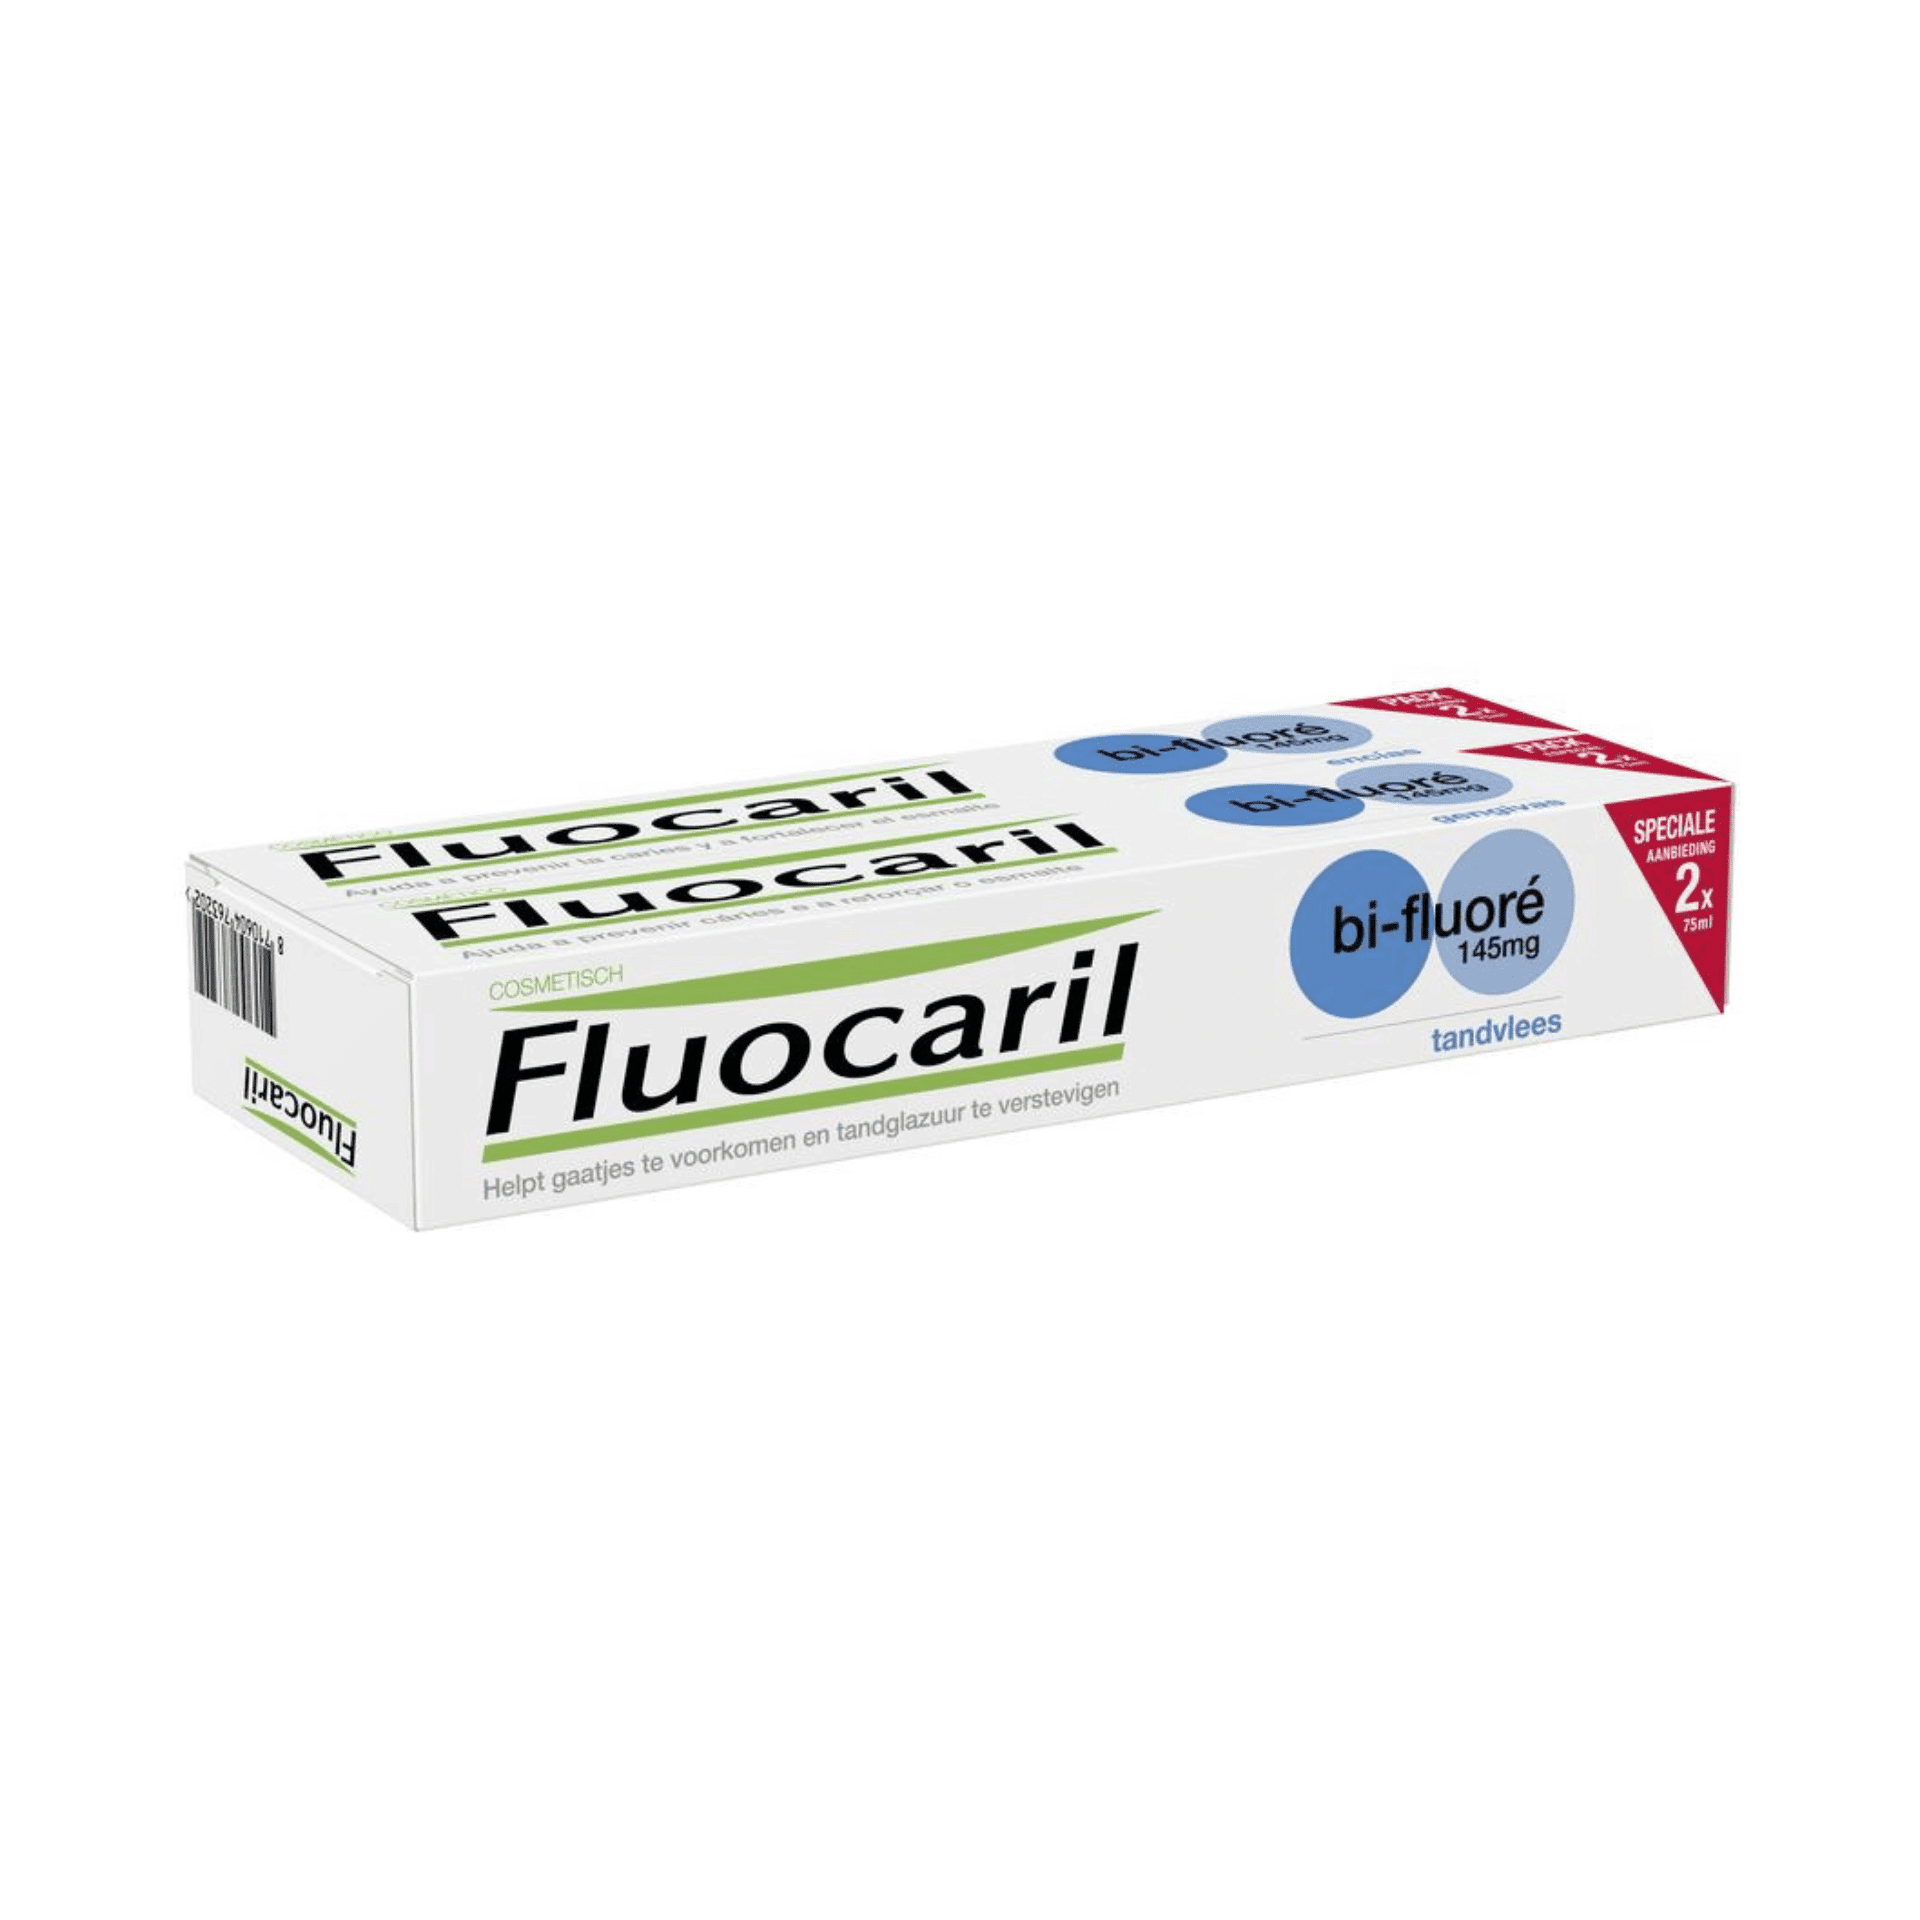 Fluocaril Tandpasta Bi-fluoré 145 mg Tandvlees